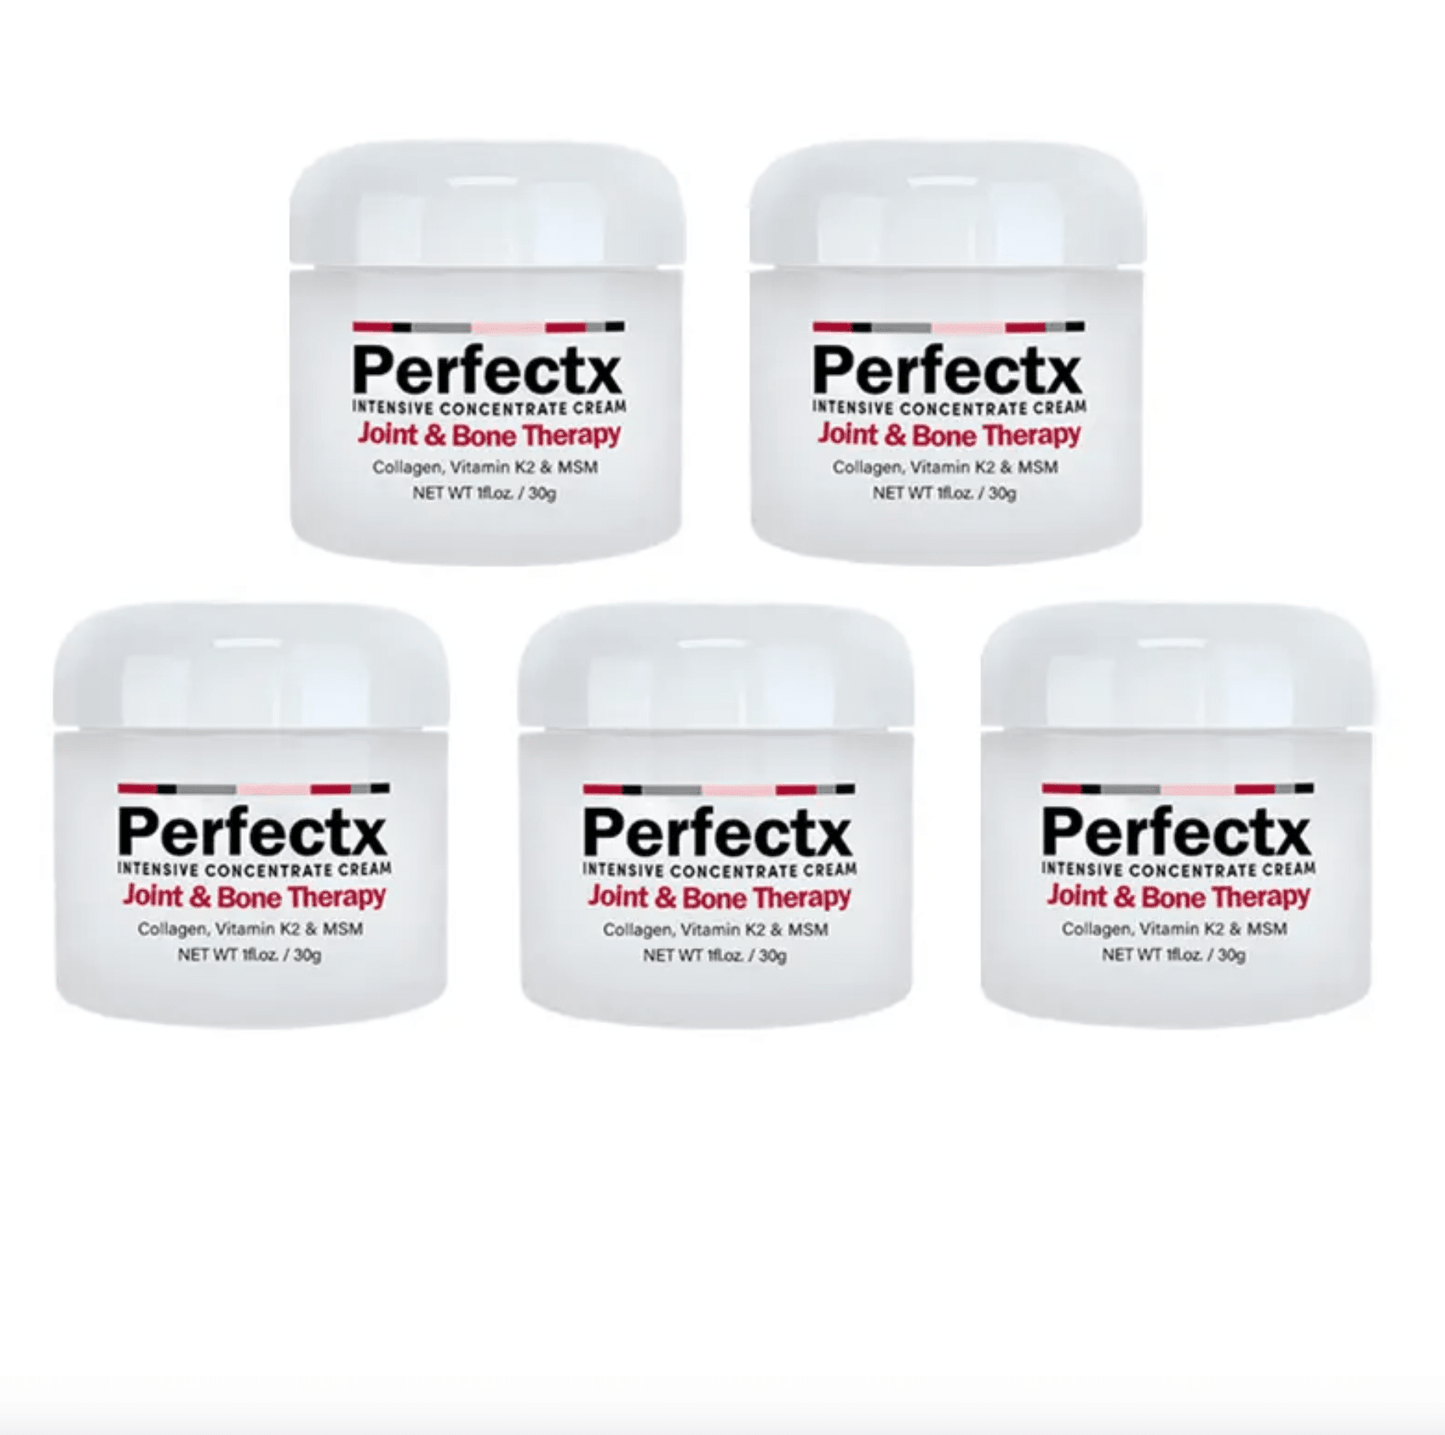 GFOUK™ Perfectx Joint And Bone Therapy Cream KJ YXKJ9999-0379 🔥$69.97 ⭐️5 Packs⭐️(13.99/Pack)60% OFF 